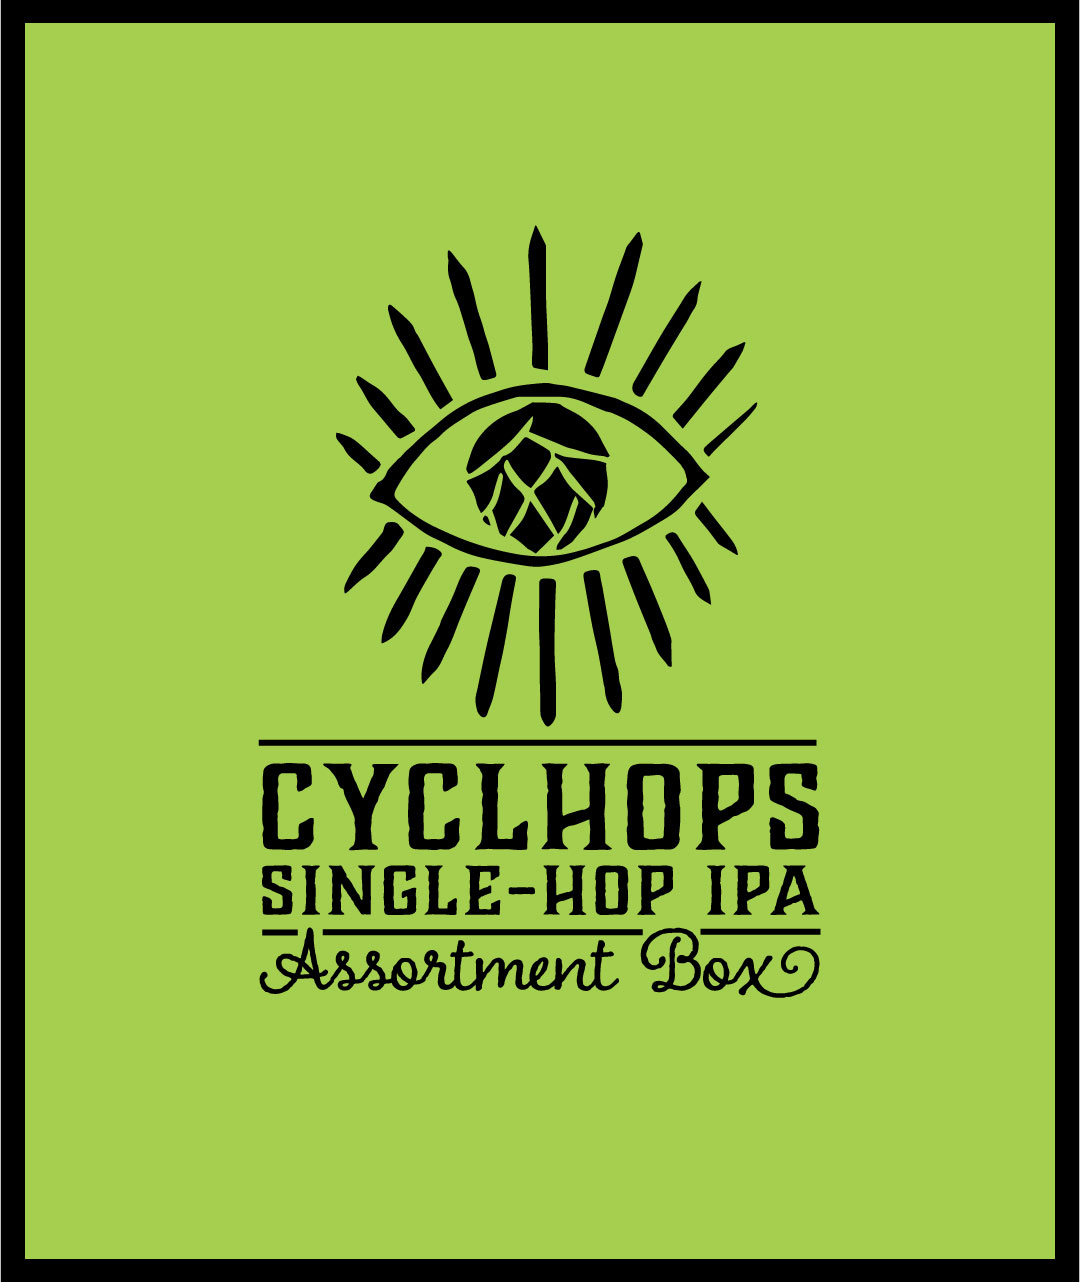 CYCLHOPS SINGLE HOP IPA ASSORTMENT BOX 2022